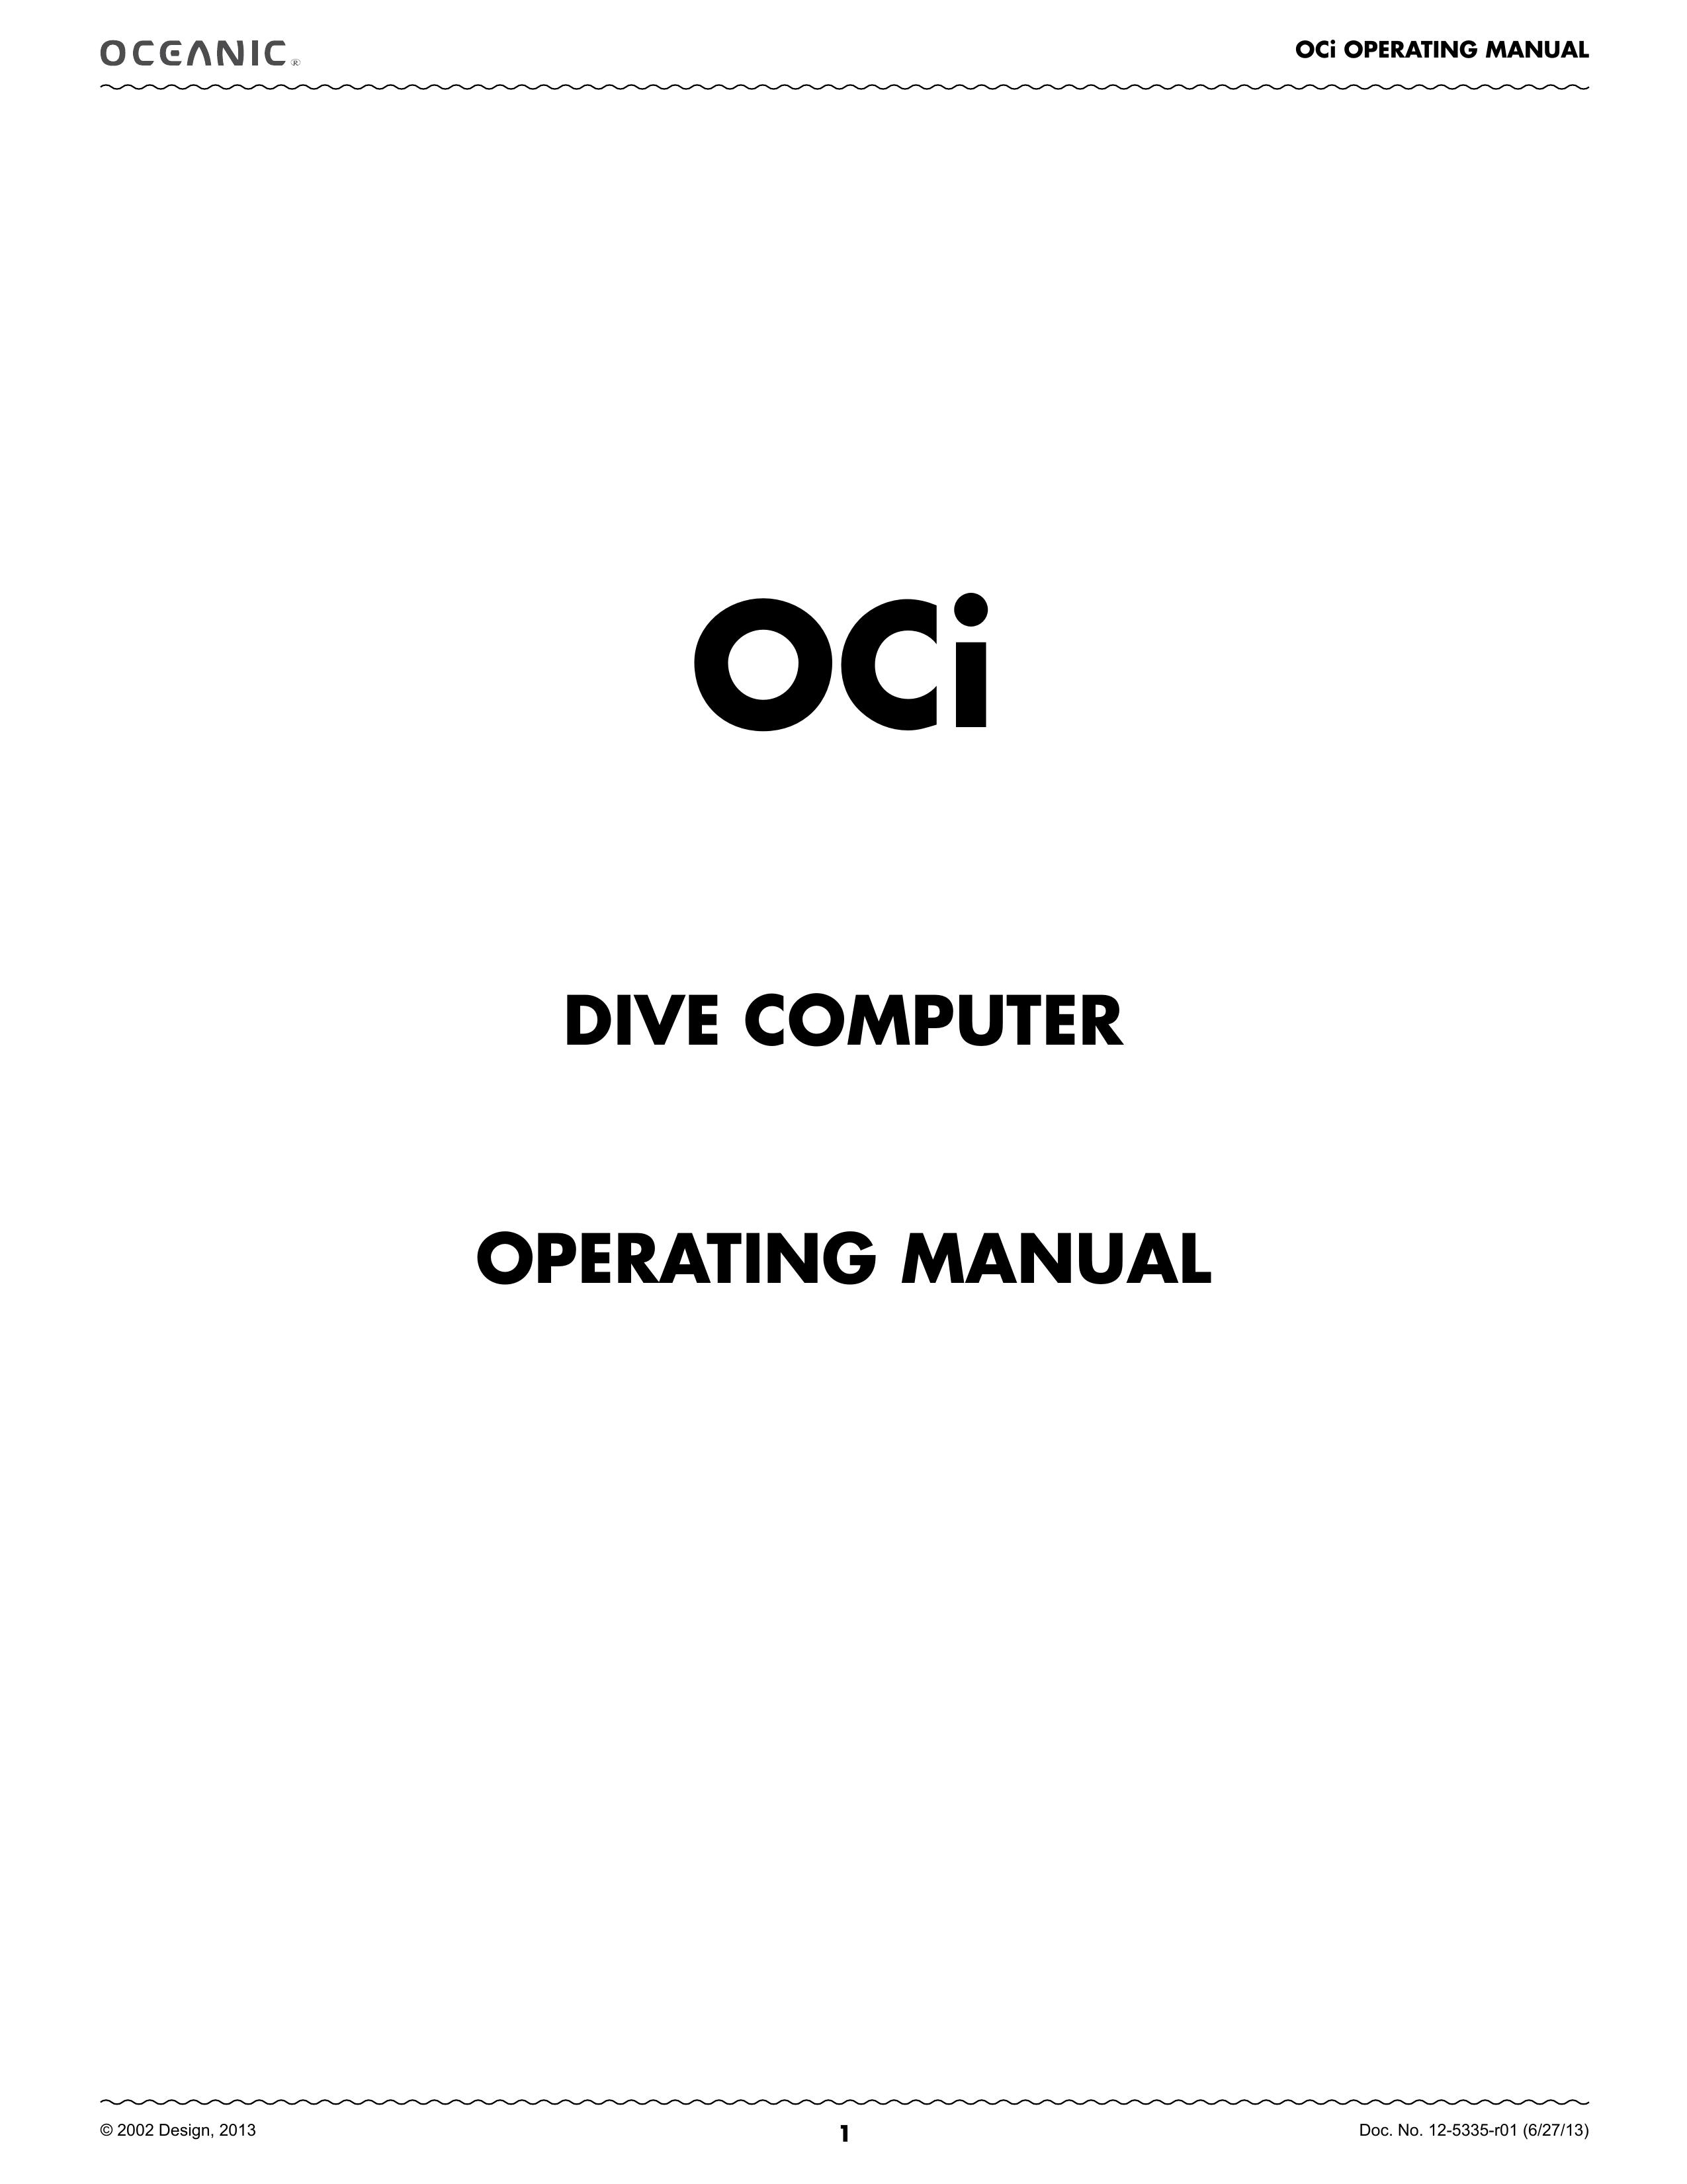 Oceanic 04-8791-36 Scuba Diving Equipment User Manual